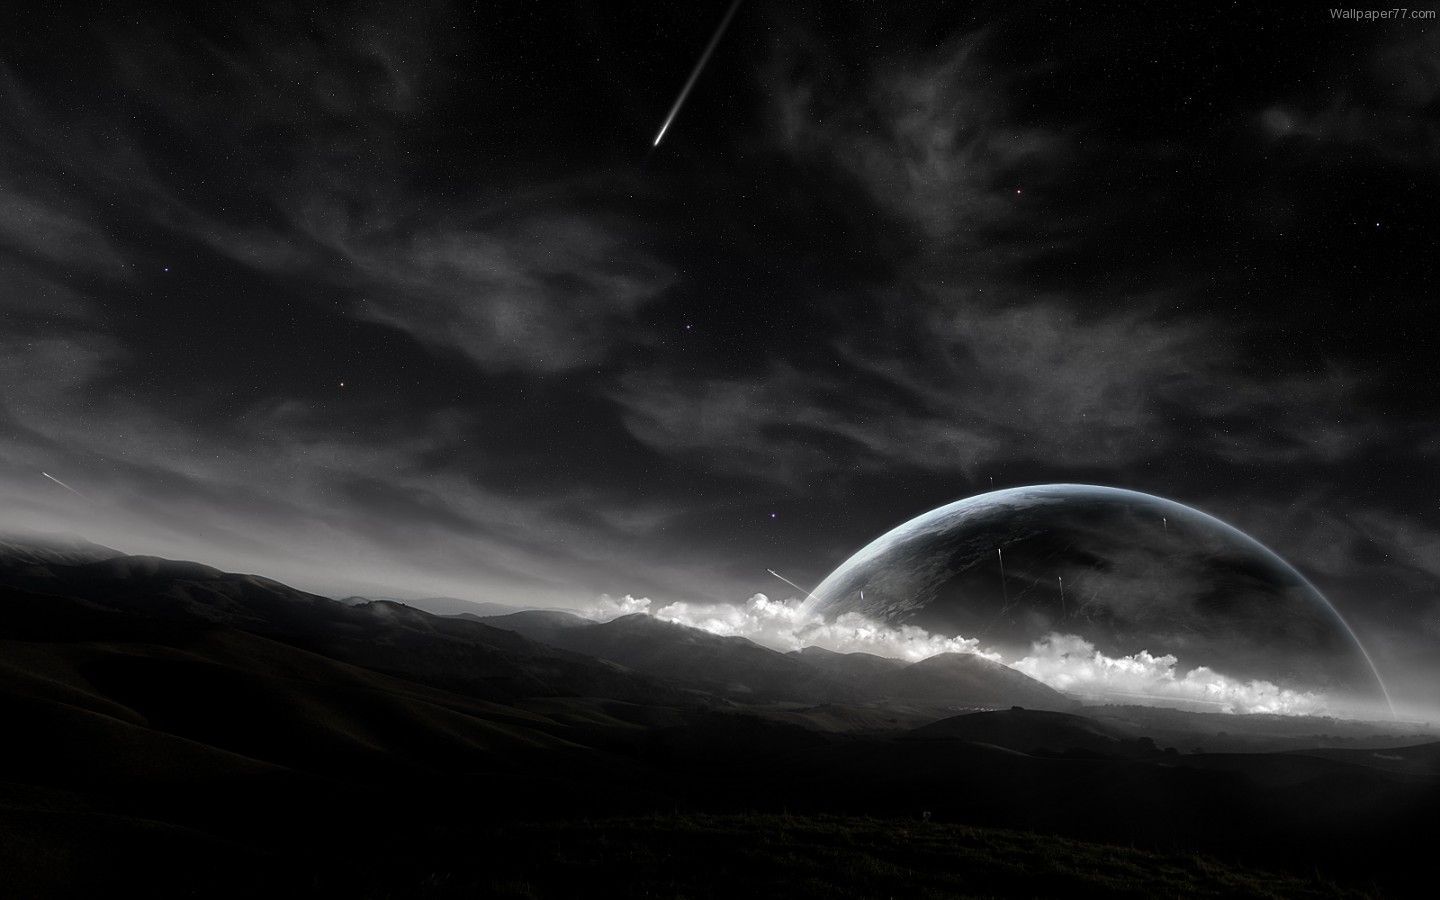 Starlit Night Black Earth Orbit Planet Planet Wallpapers Space